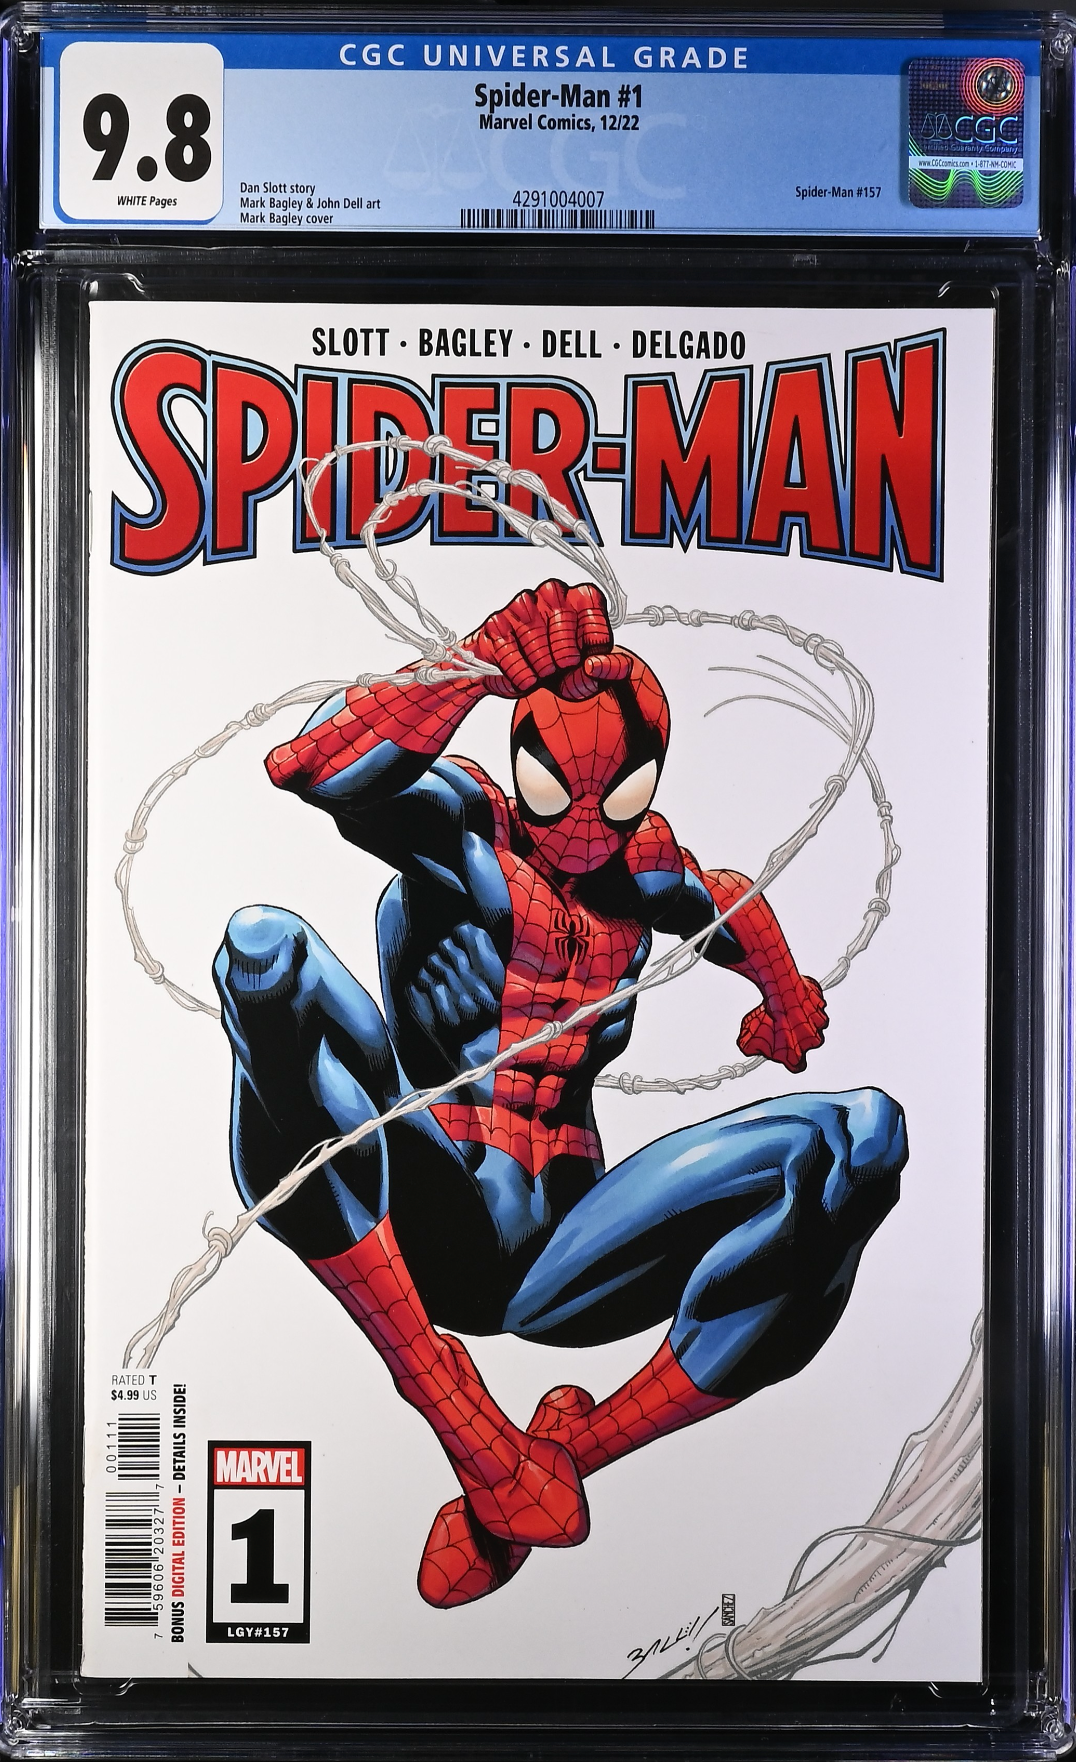 Spider-Man #1 CGC 9.8 - New Series!